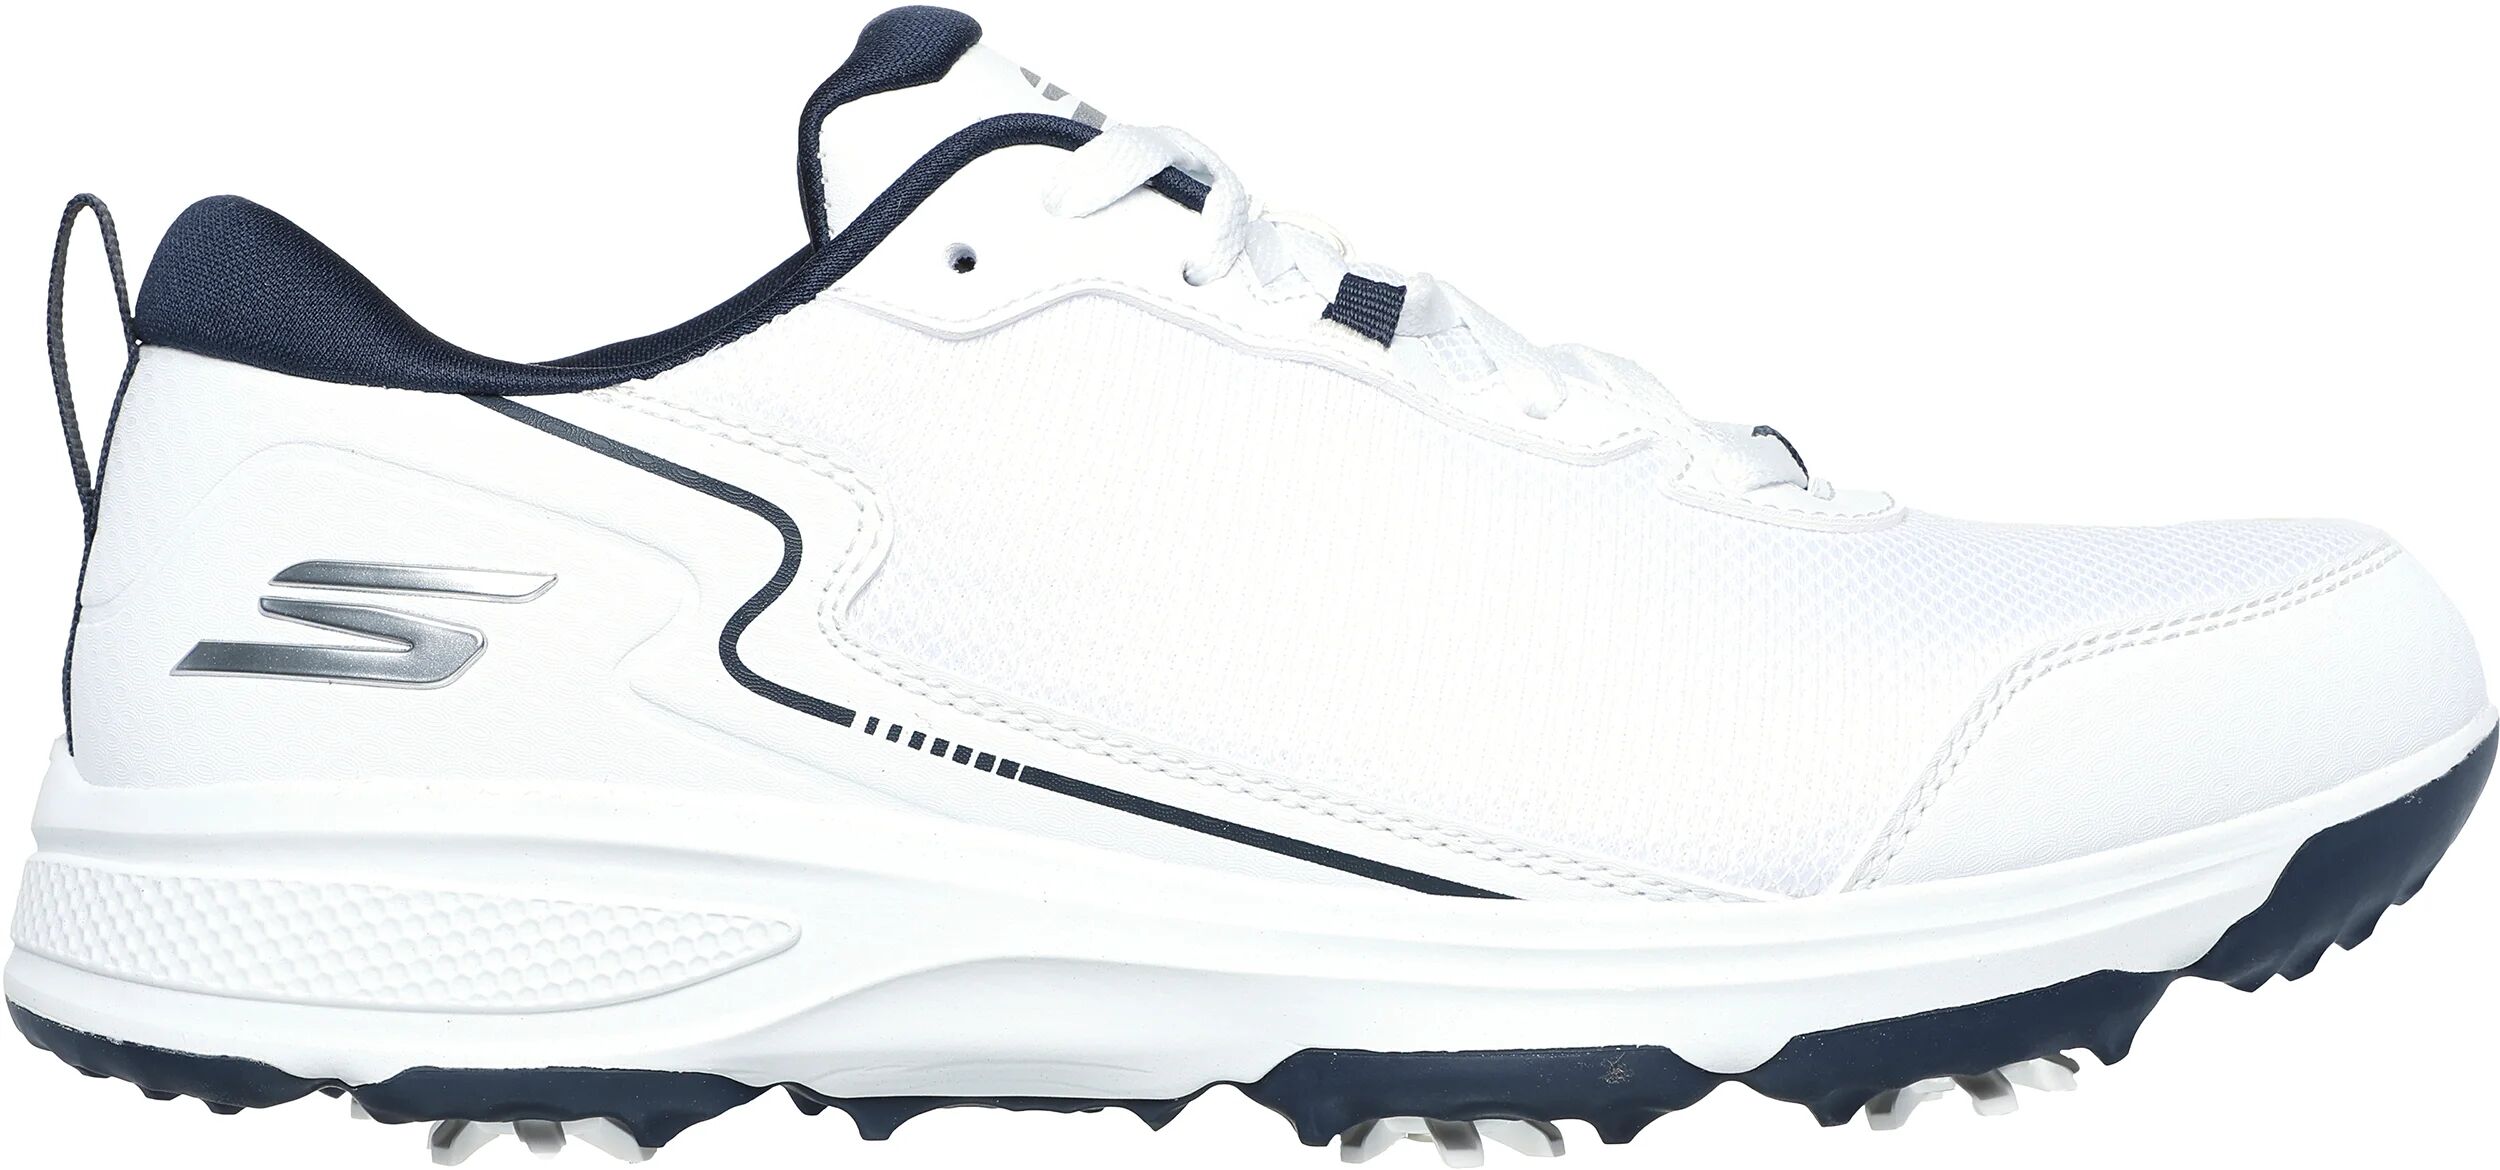 Skechers GO GOLF Torque Sport 2 Golf Shoes - White/Navy - 11 - MEDIUM